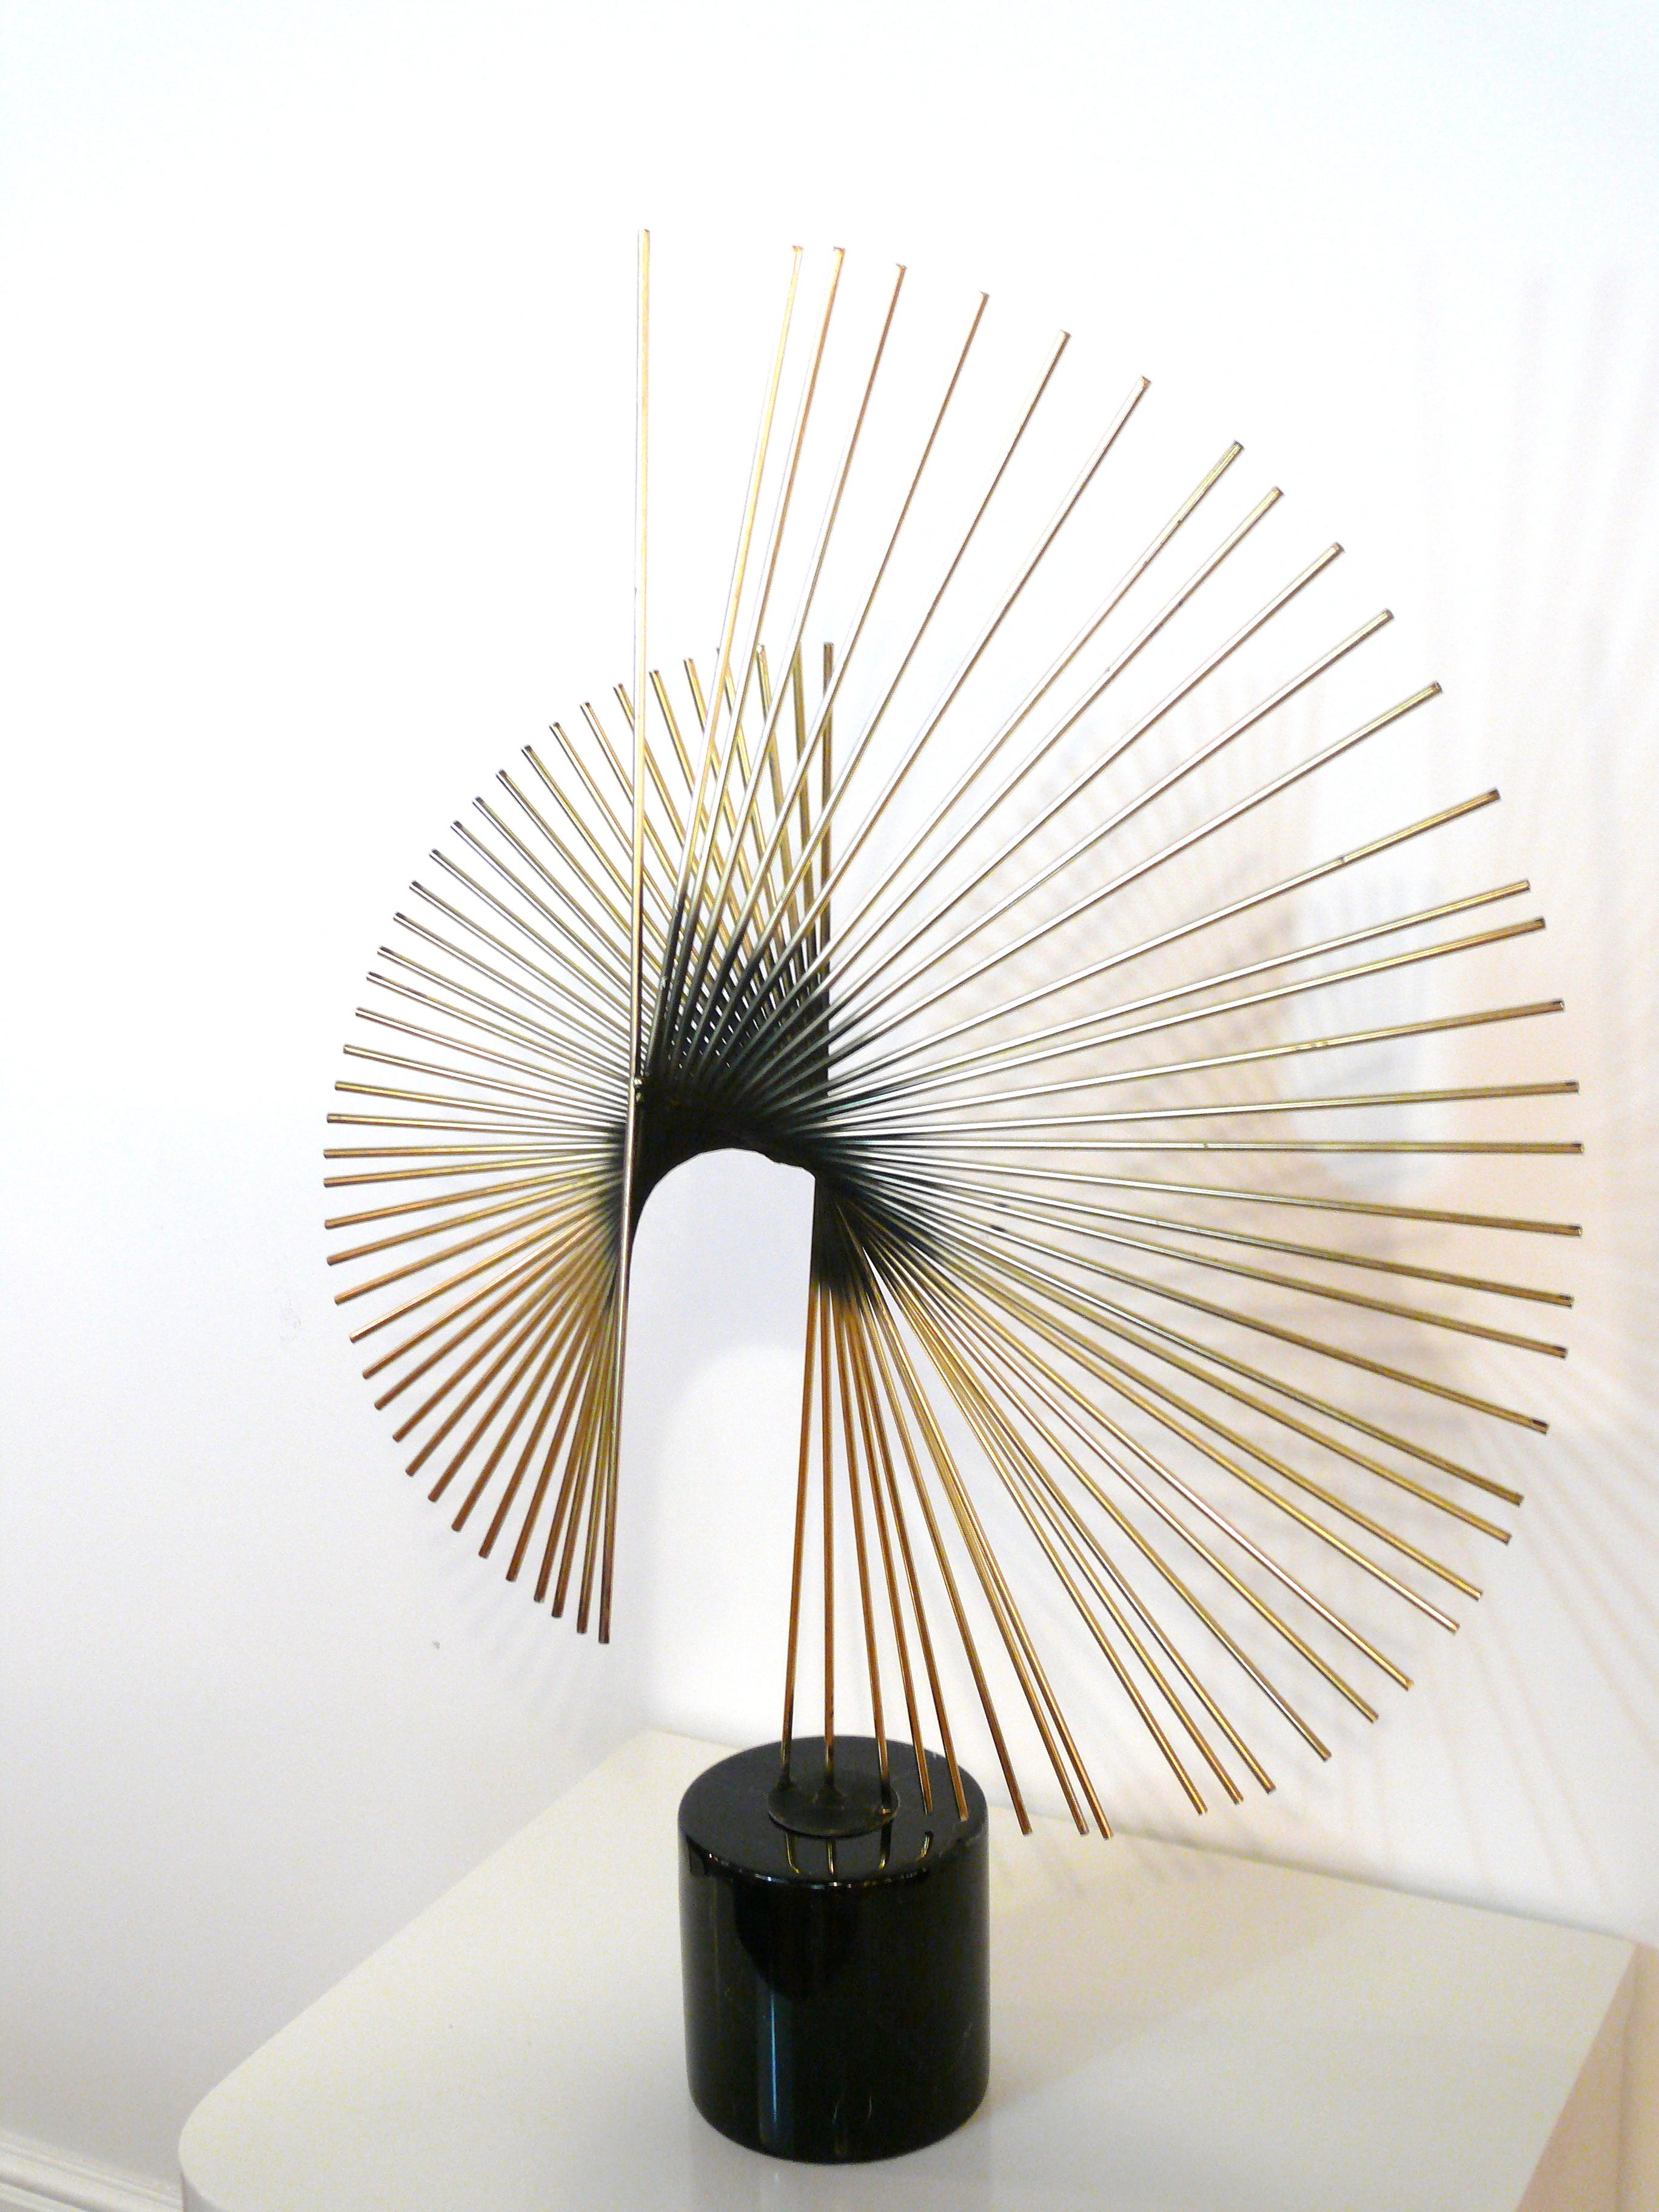 Curtis Jere Feathered Spiral Sculpture